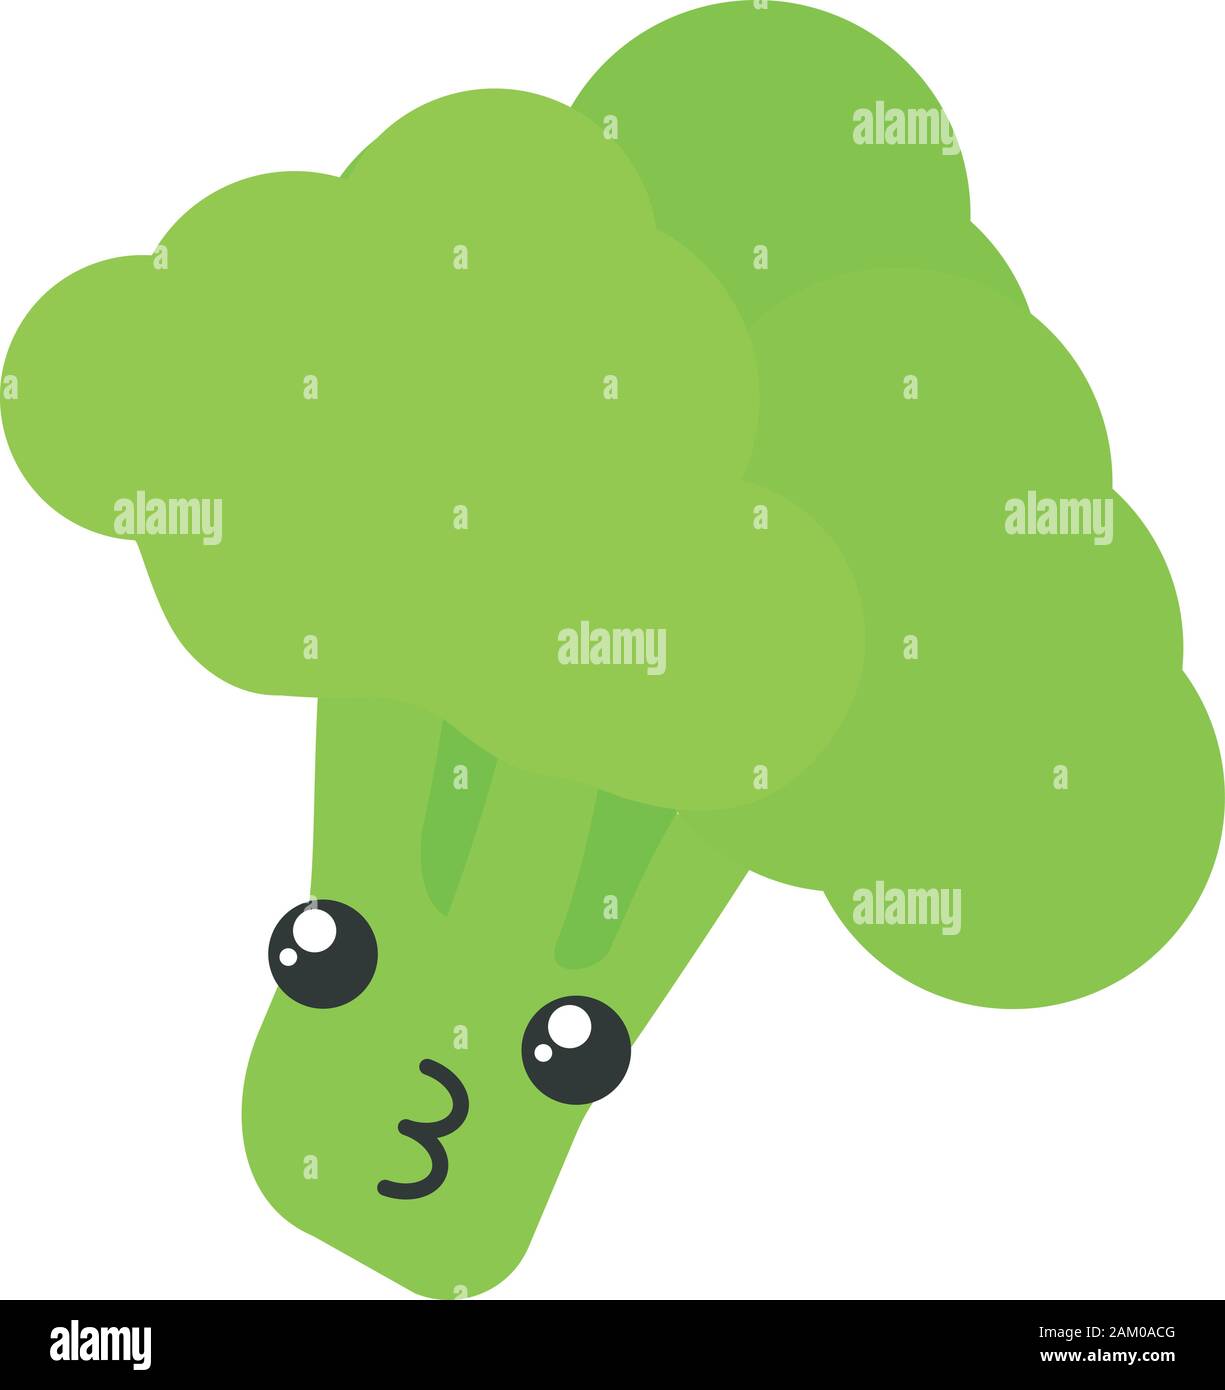 Le Brocoli Cute Kawaii Modele Plat Grande Ombre De Caractere Heureux Avec Des Legumes Emoji Droles Emoticone Baiser Vector Silhouette Malade Isole Image Vectorielle Stock Alamy